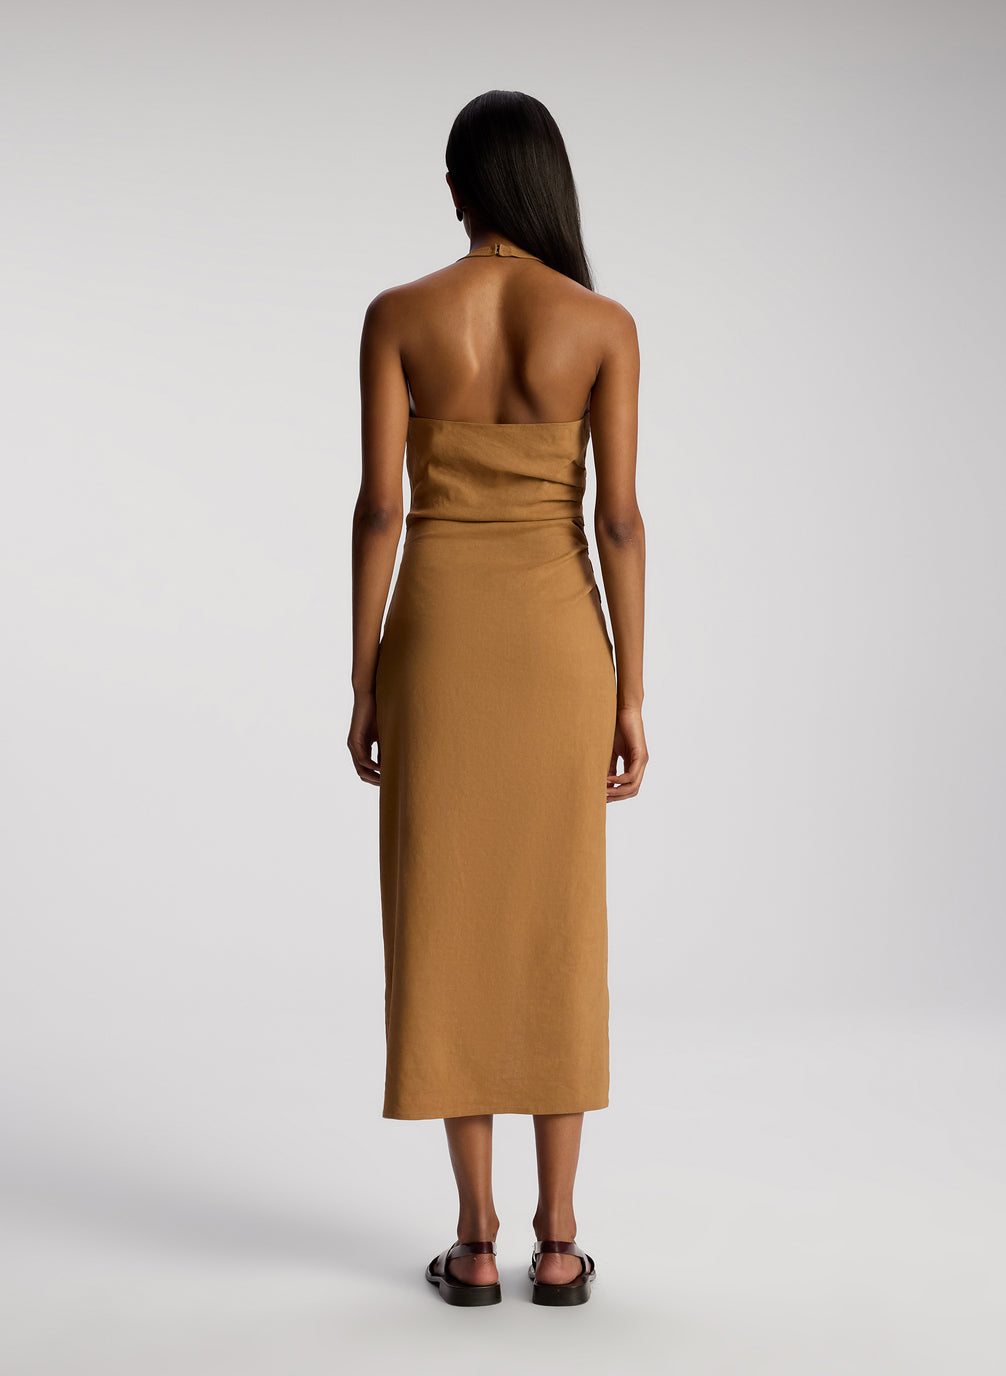 back view of woman wearing brown sleeveless midi dress